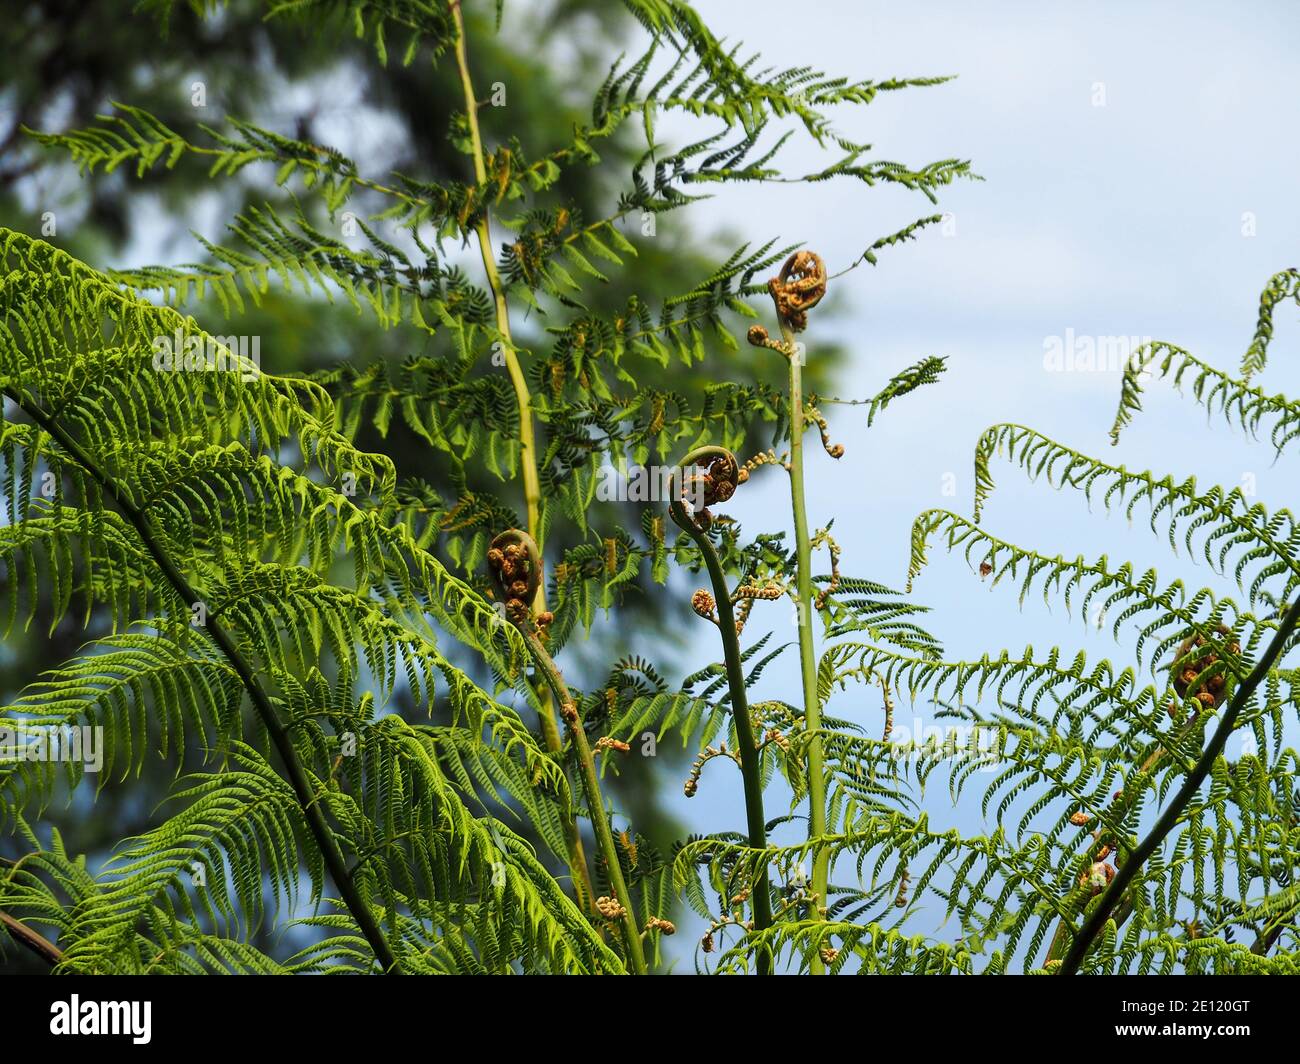 Tree fern spirals against Blue sky, Australia Stock Photo